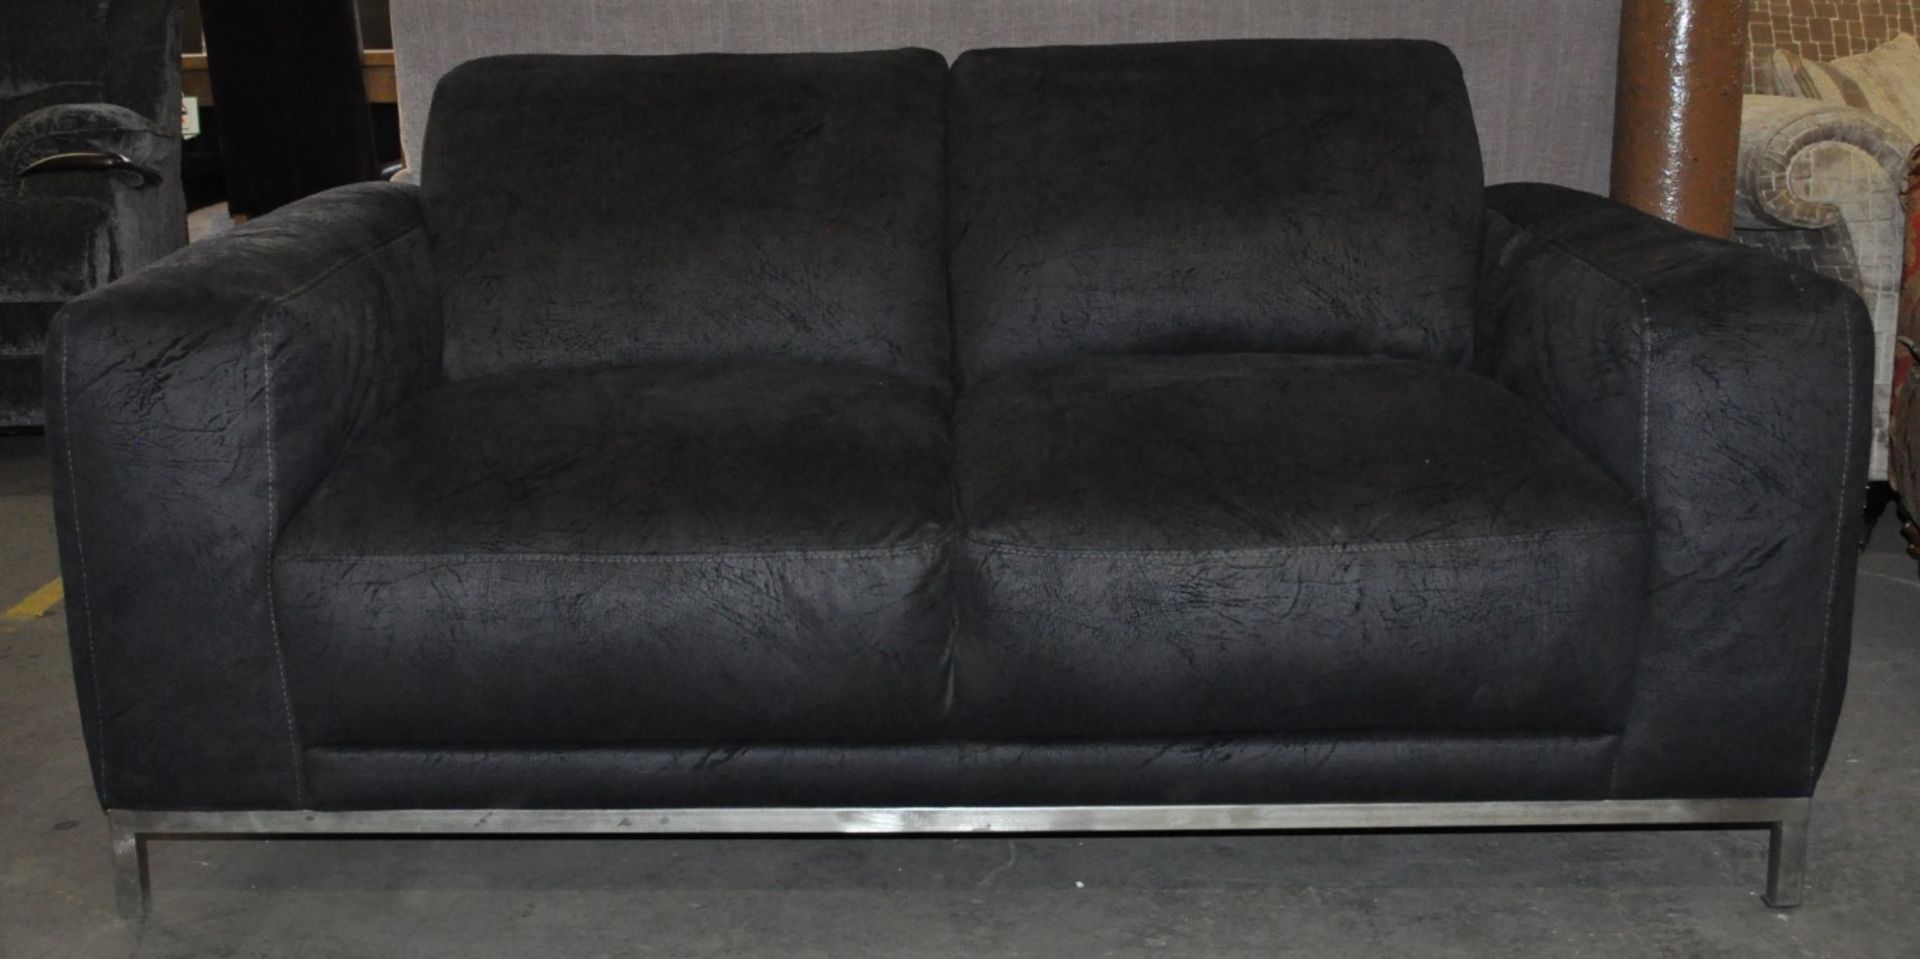 1 x Valetta Crackle Fabric Sofa – Dimension : 170x100x80cm – Ex Display - CH281 - CL050 – Location : - Image 4 of 6